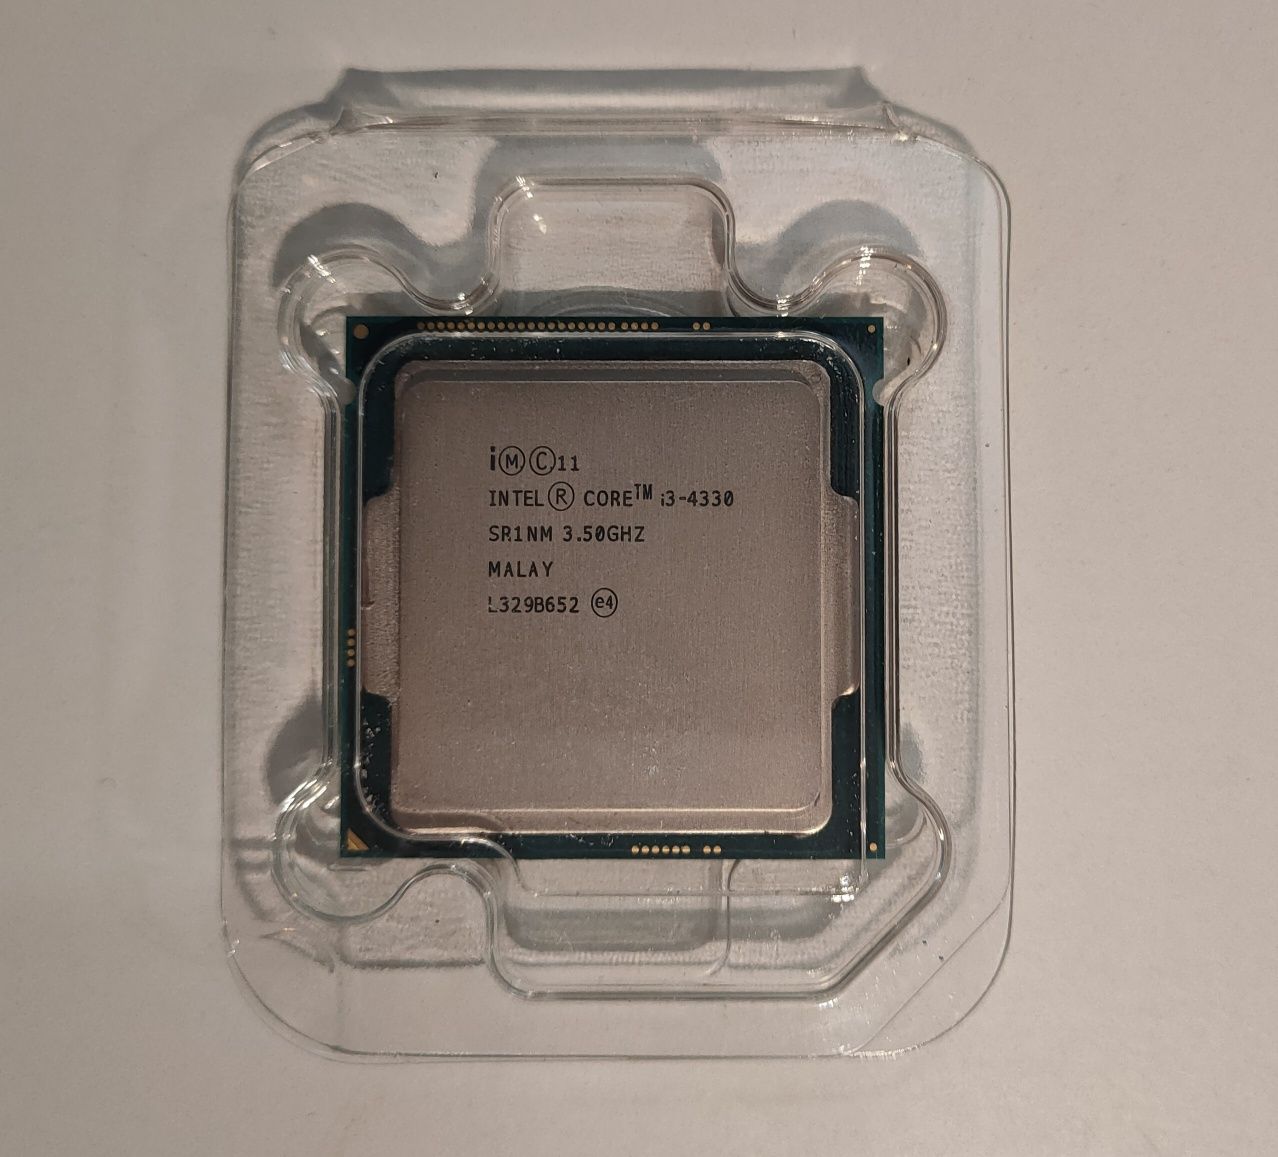 Intel core i3-4330